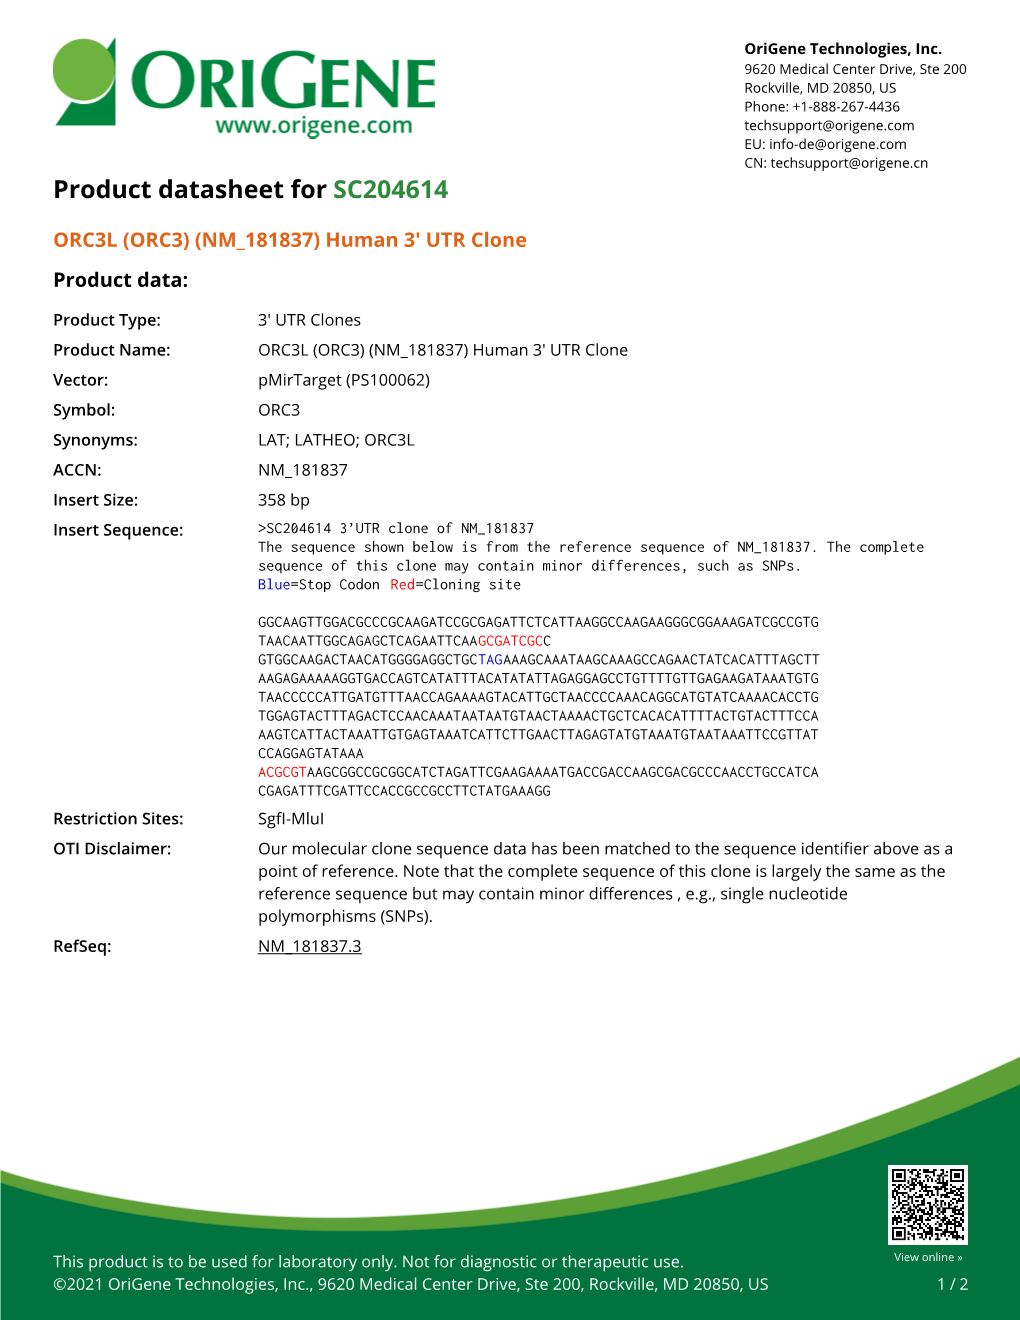 ORC3L (ORC3) (NM 181837) Human 3' UTR Clone Product Data